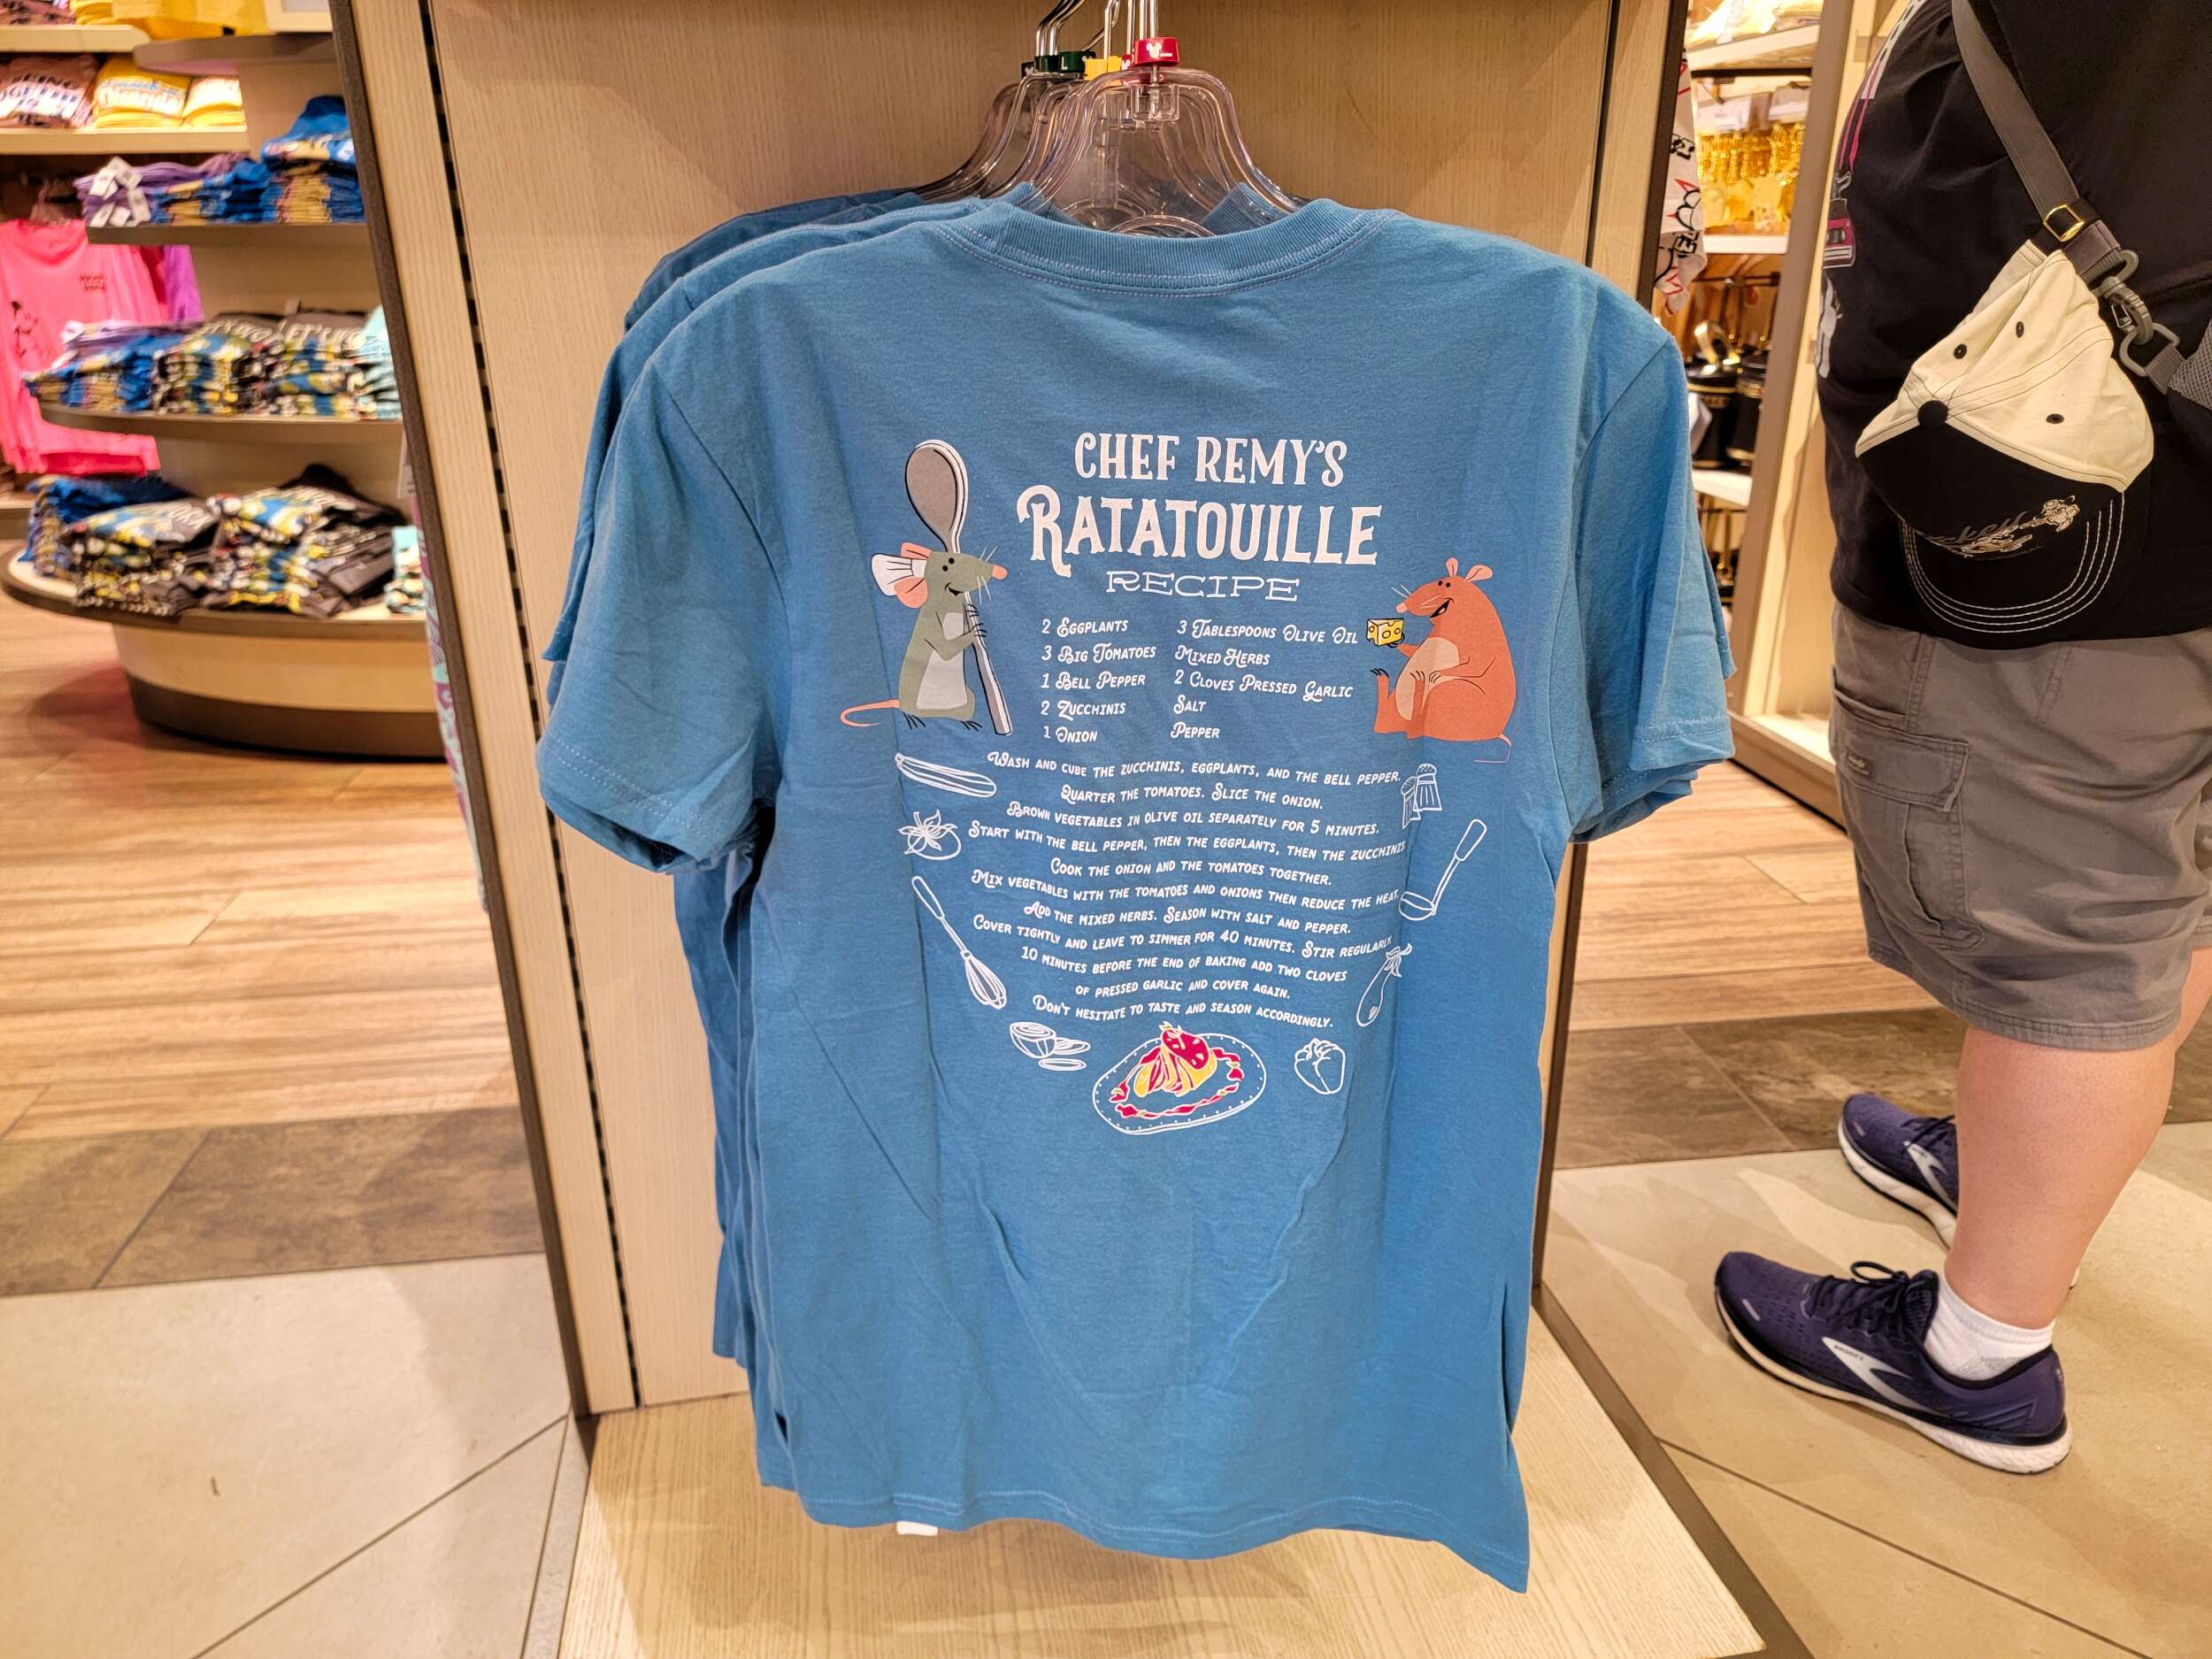 DTD WoD Ratatouille recipe shirt